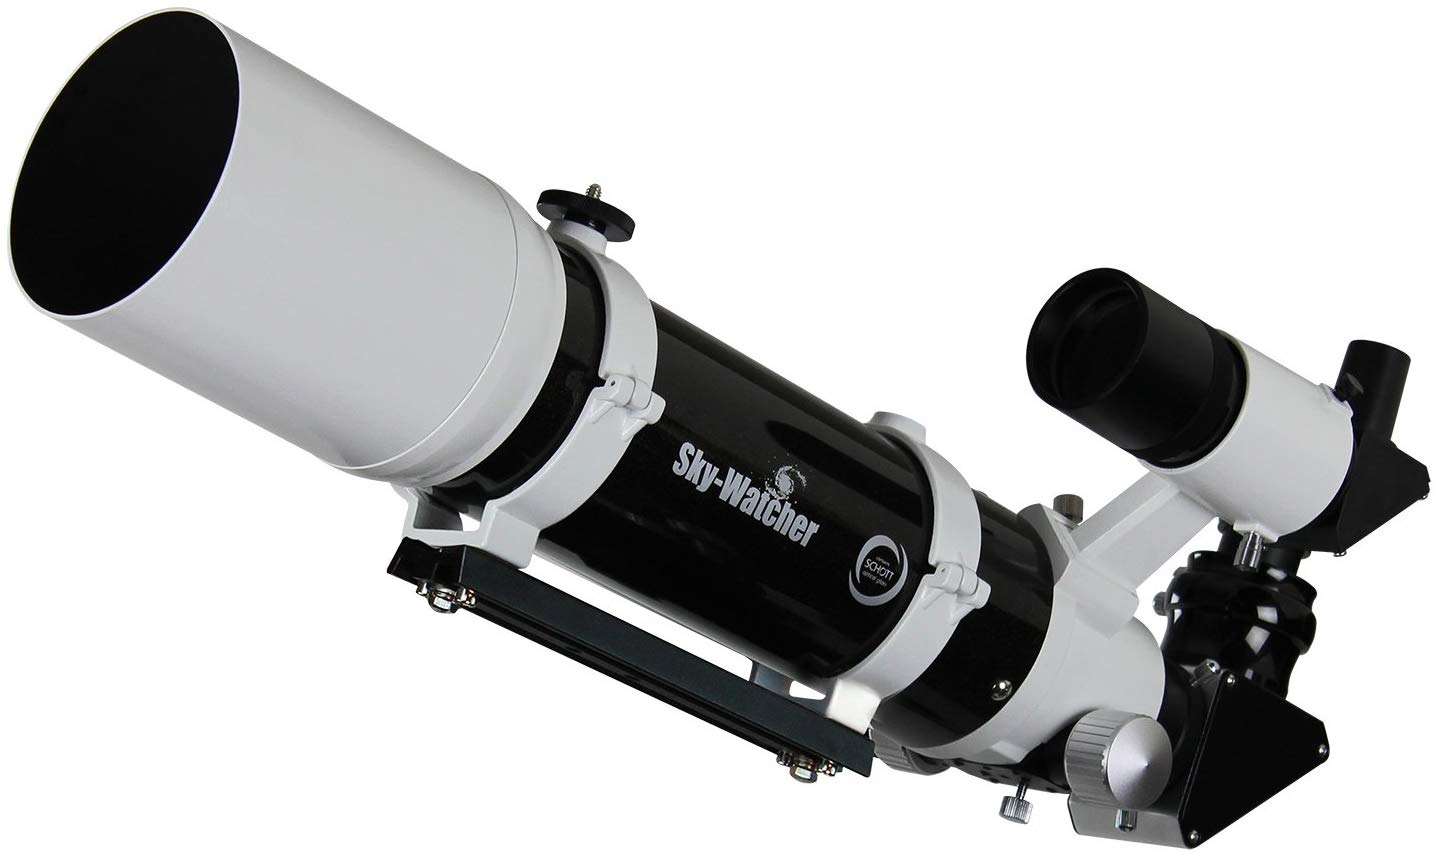 Sky-Watcher ProED 80 - the most popular beginner astrophotography telescope on the market